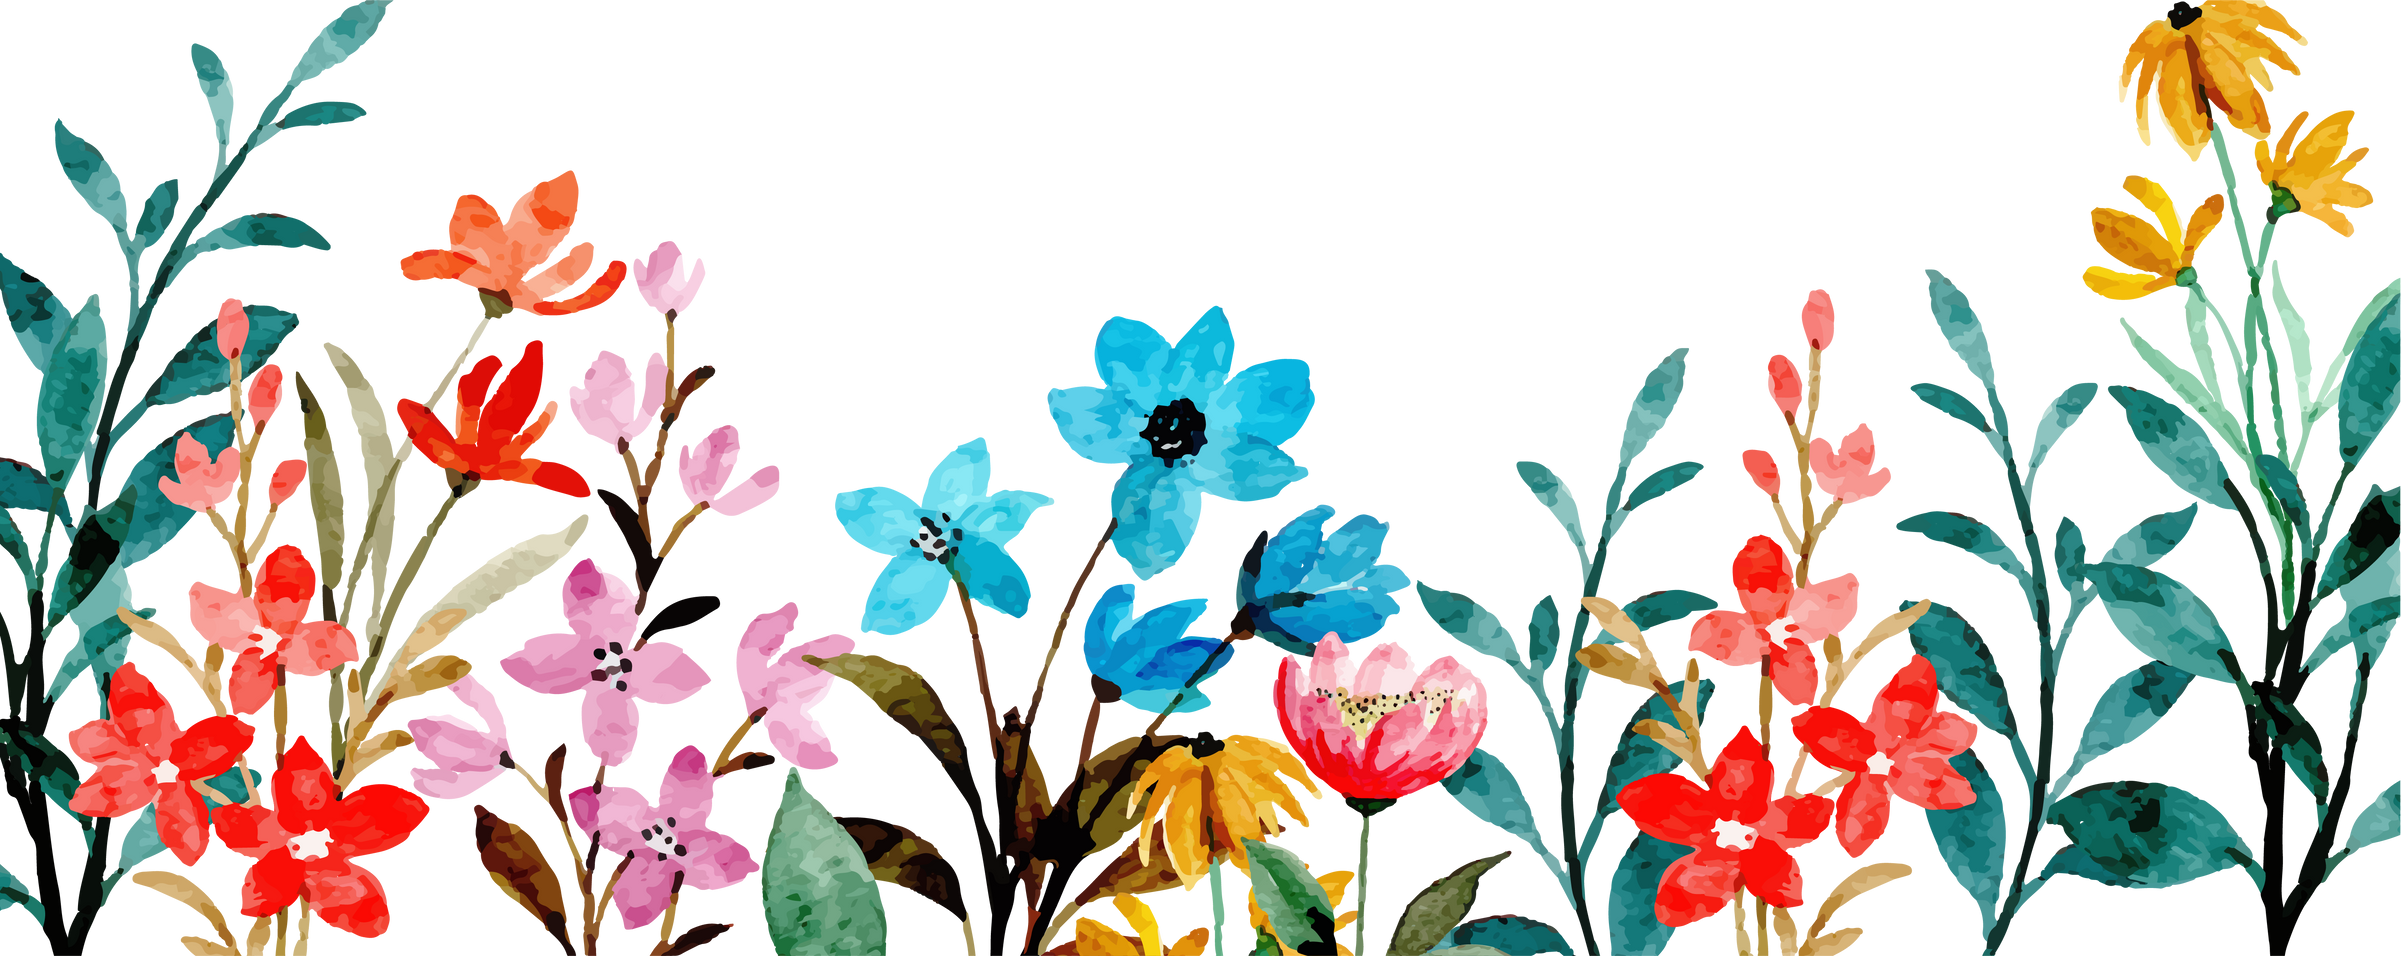 Watercolor flower border